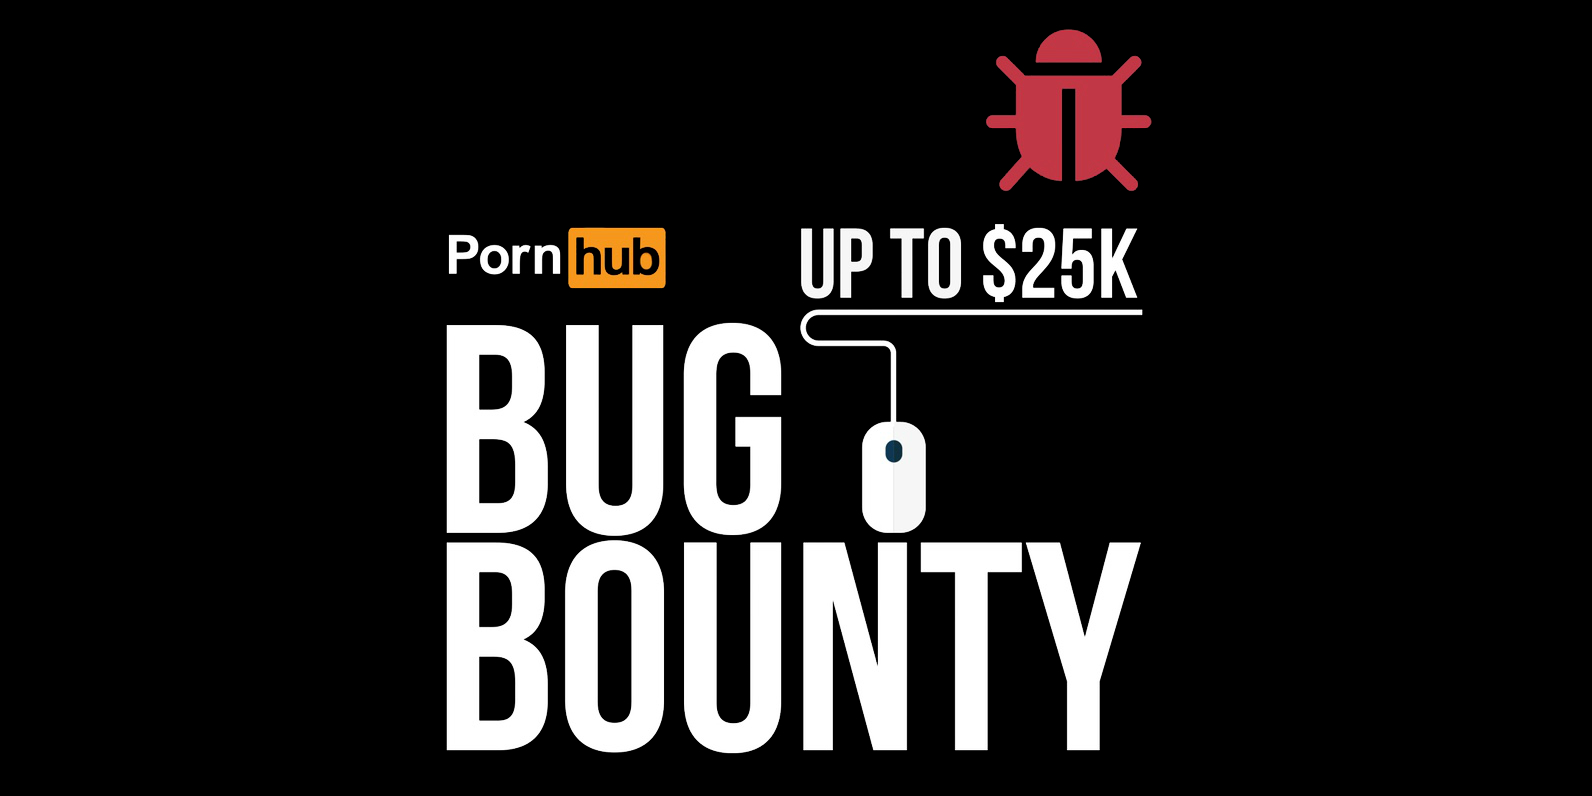 Pornhub Bug Bounty Program